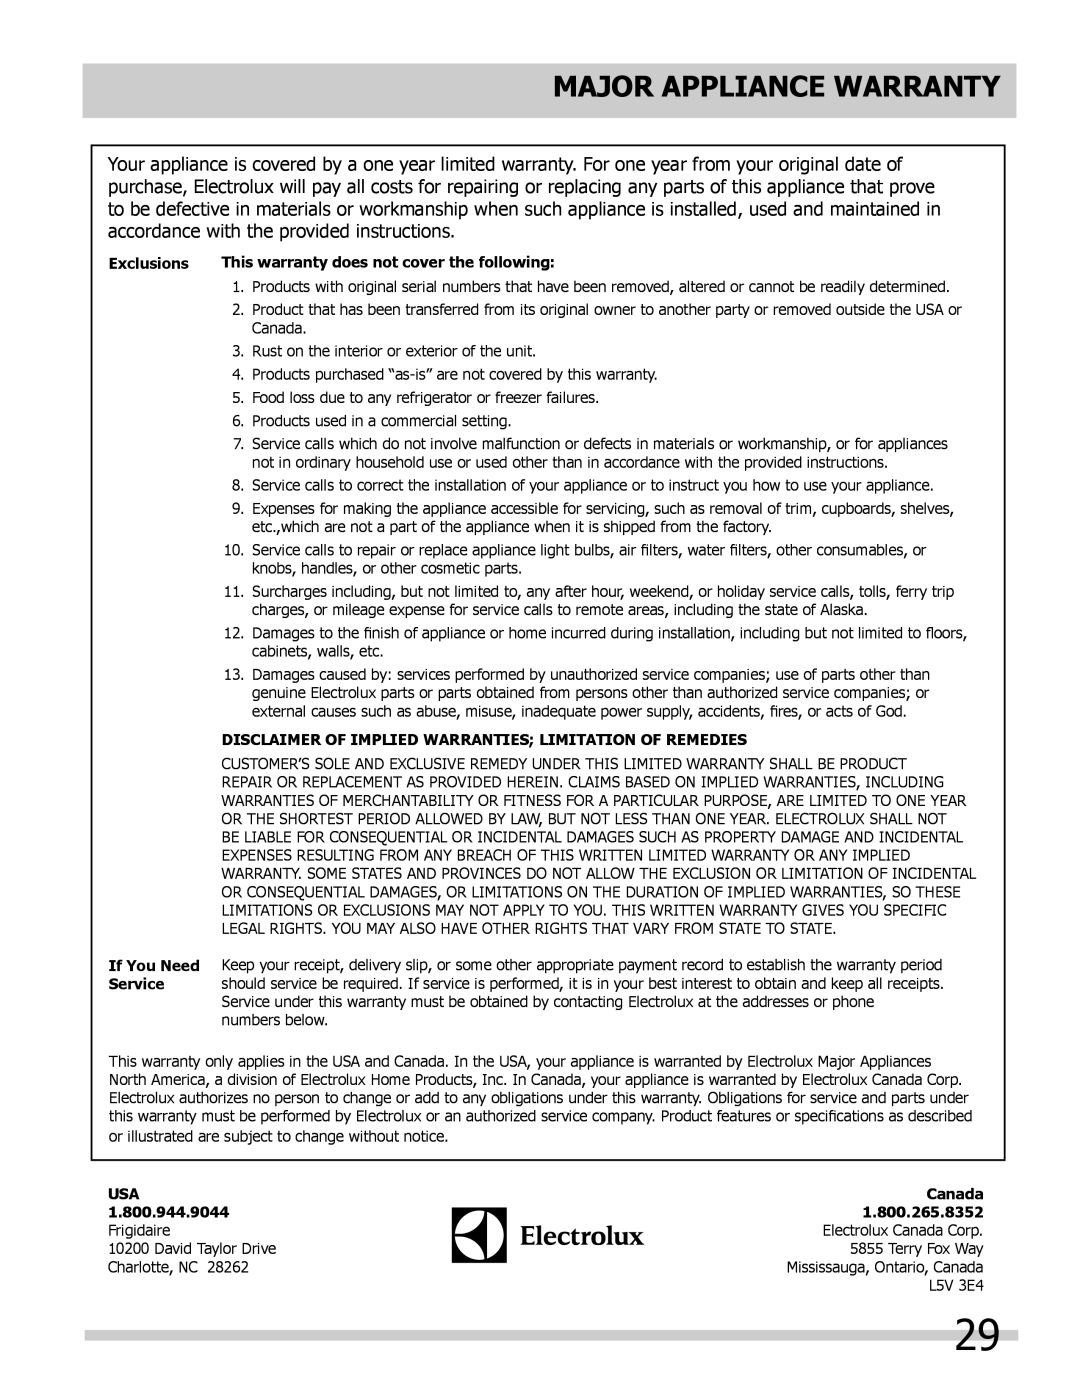 Frigidaire 242292000 Major Appliance Warranty, Exclusions, Disclaimer Of Implied Warranties Limitation Of Remedies, Canada 